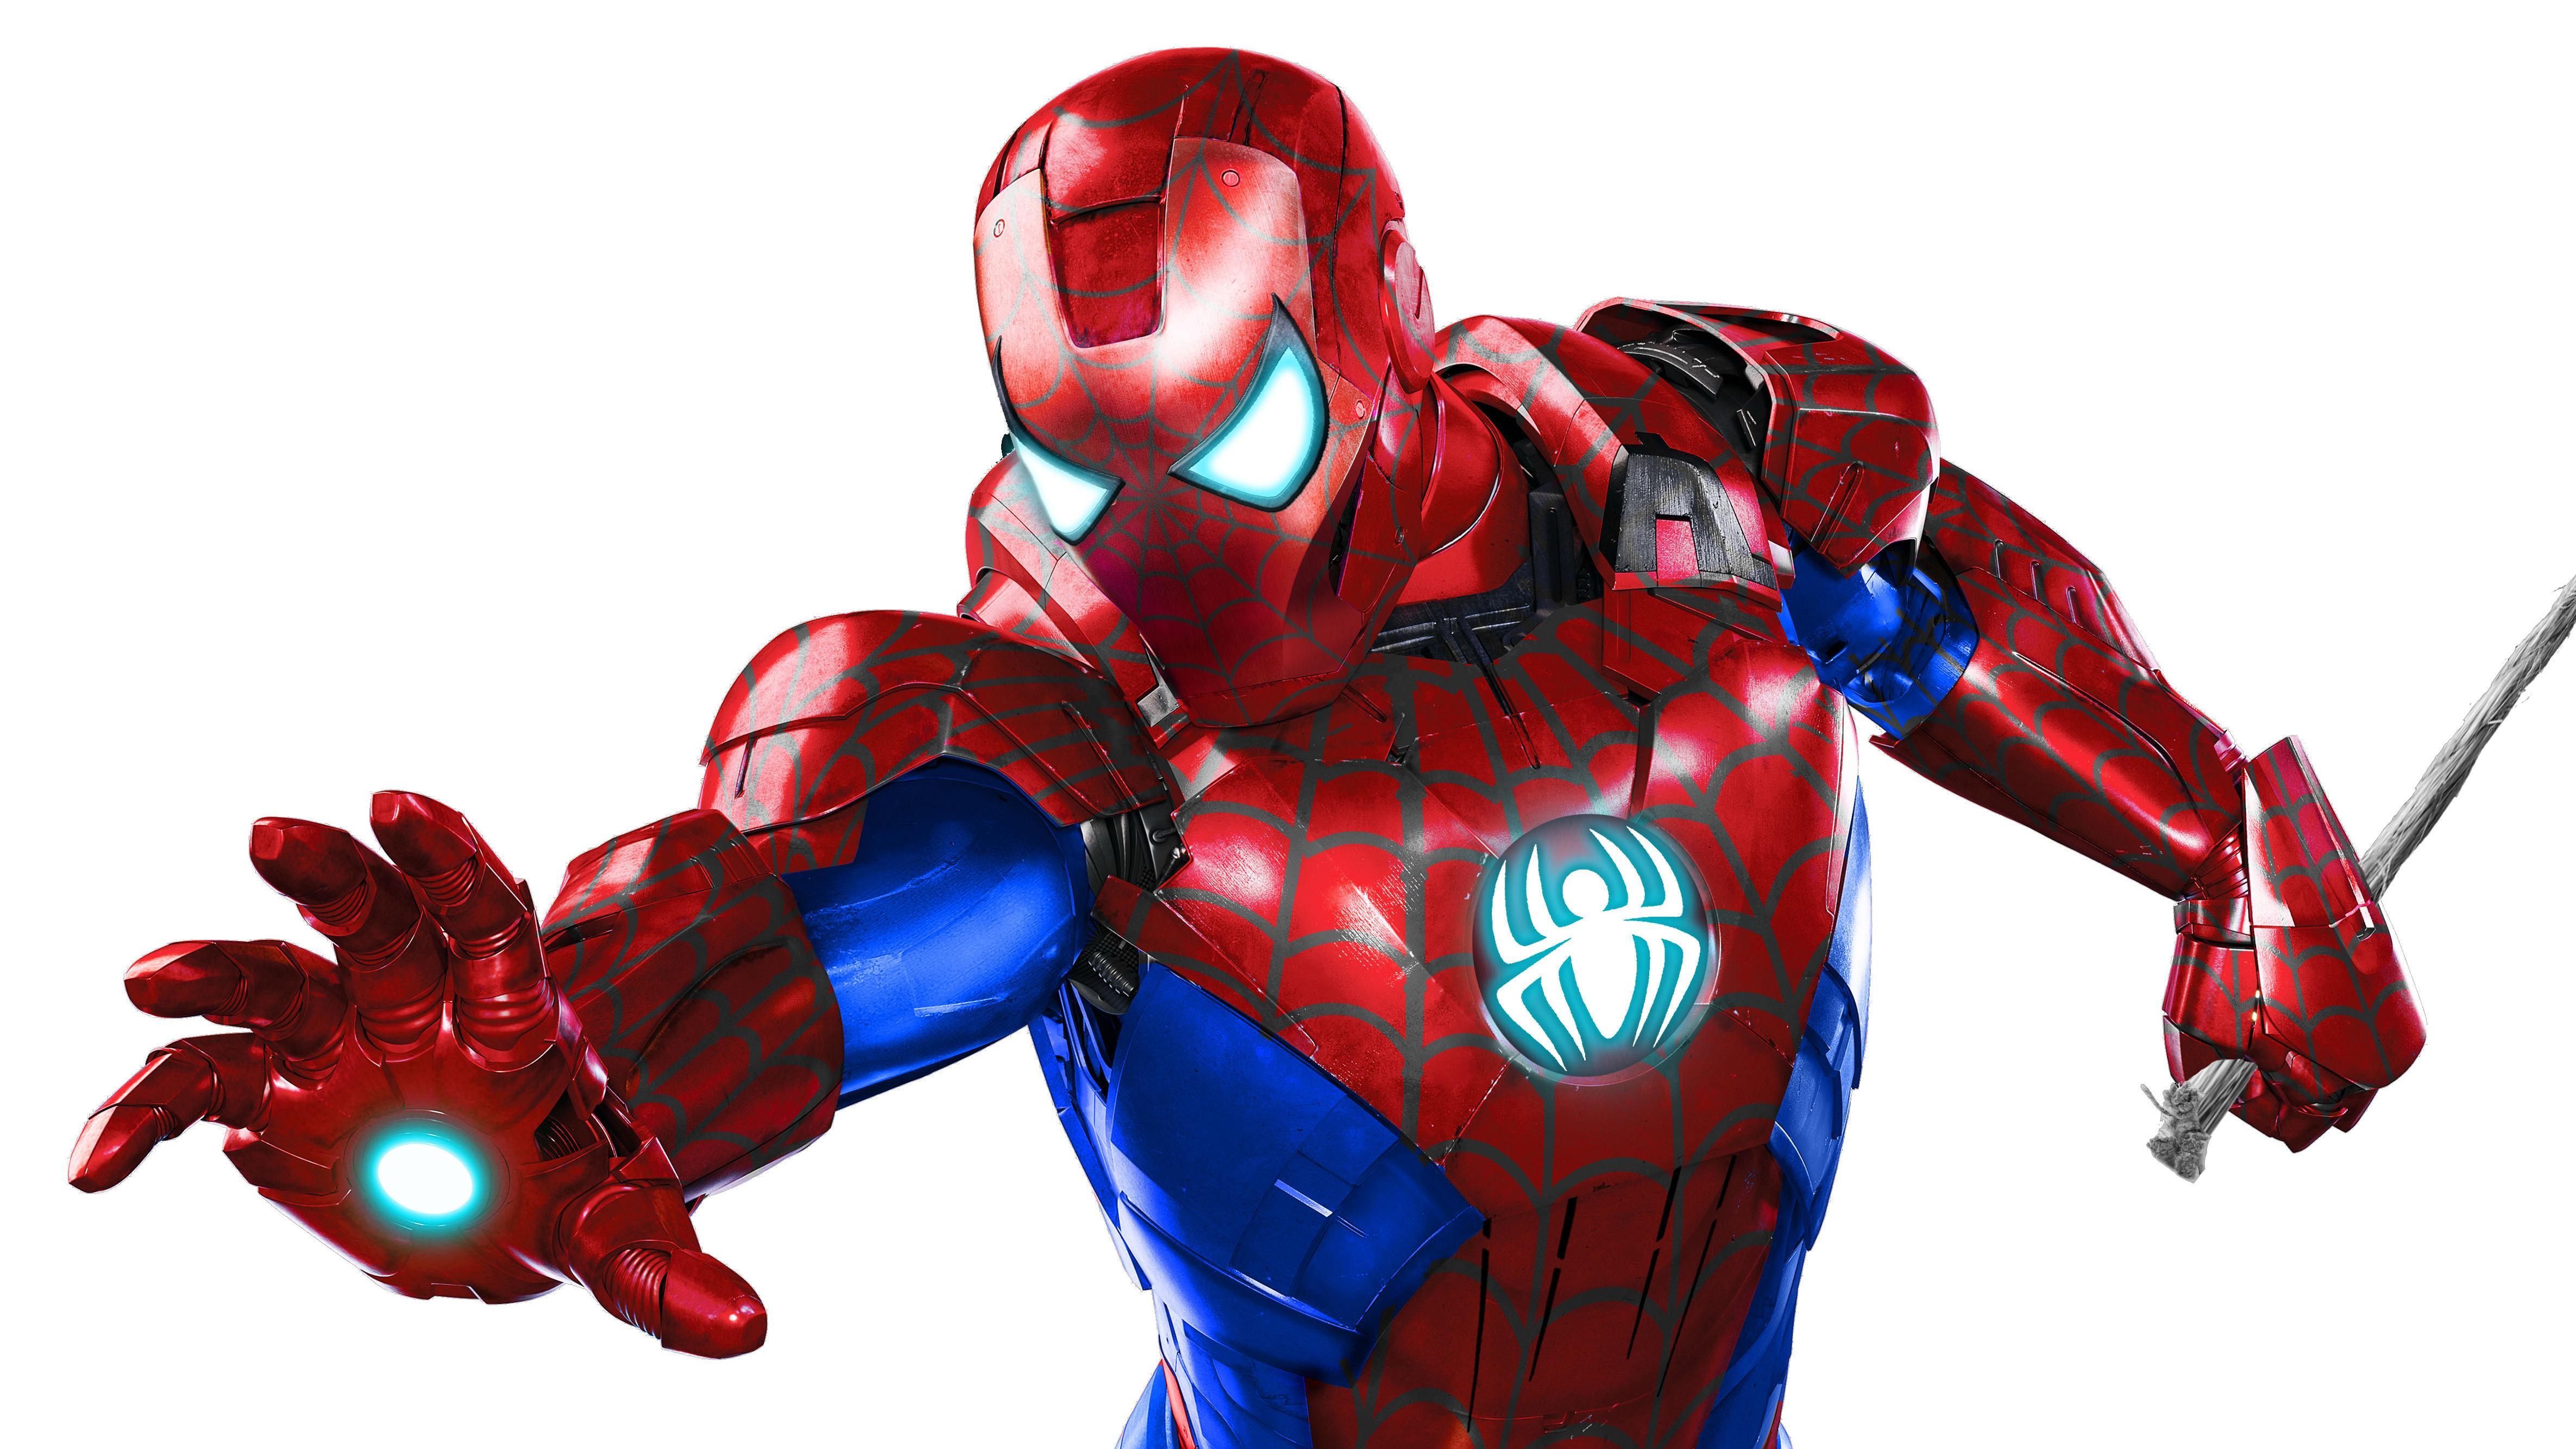 Iron Spider Man Suit 4k, HD Superheroes, 4k Wallpaper, Image